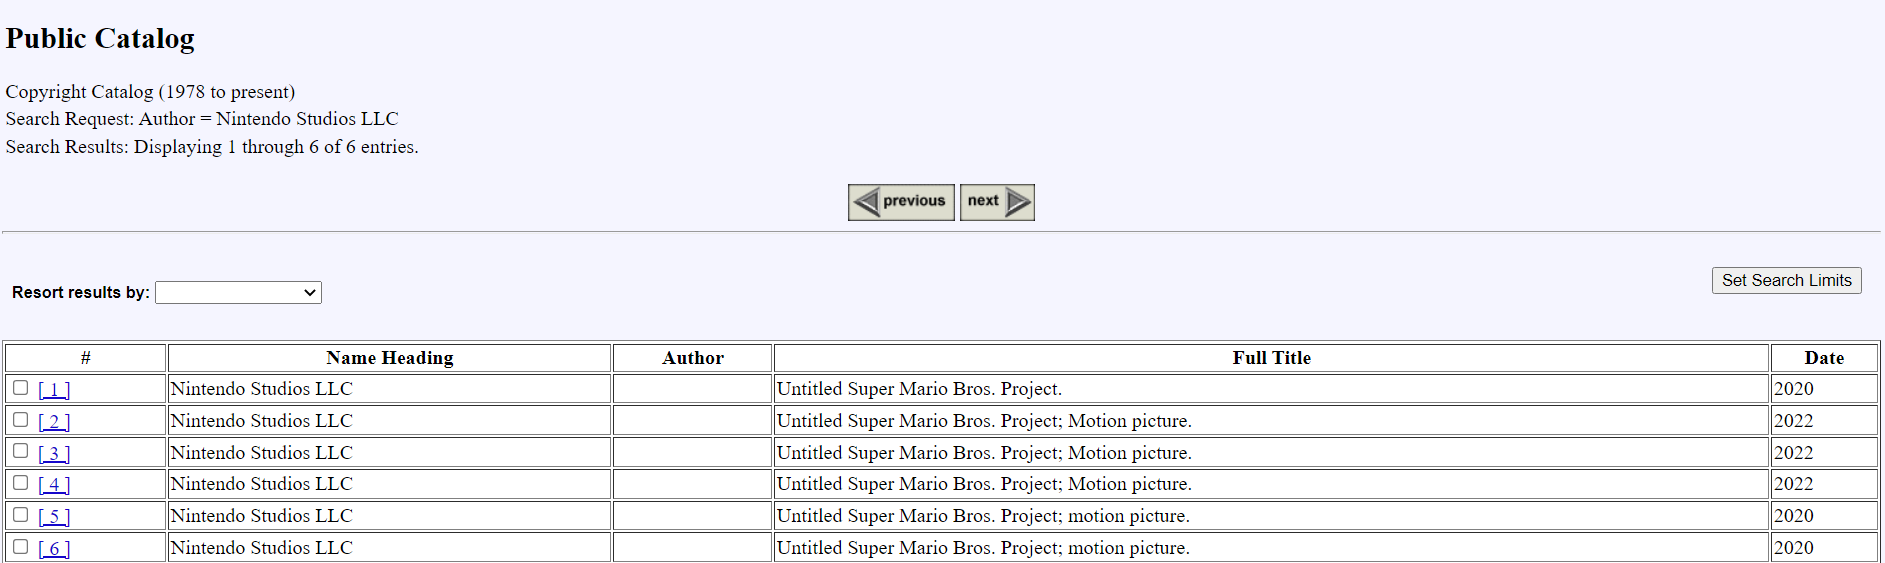 Nintendo Studios Copyright Catalog